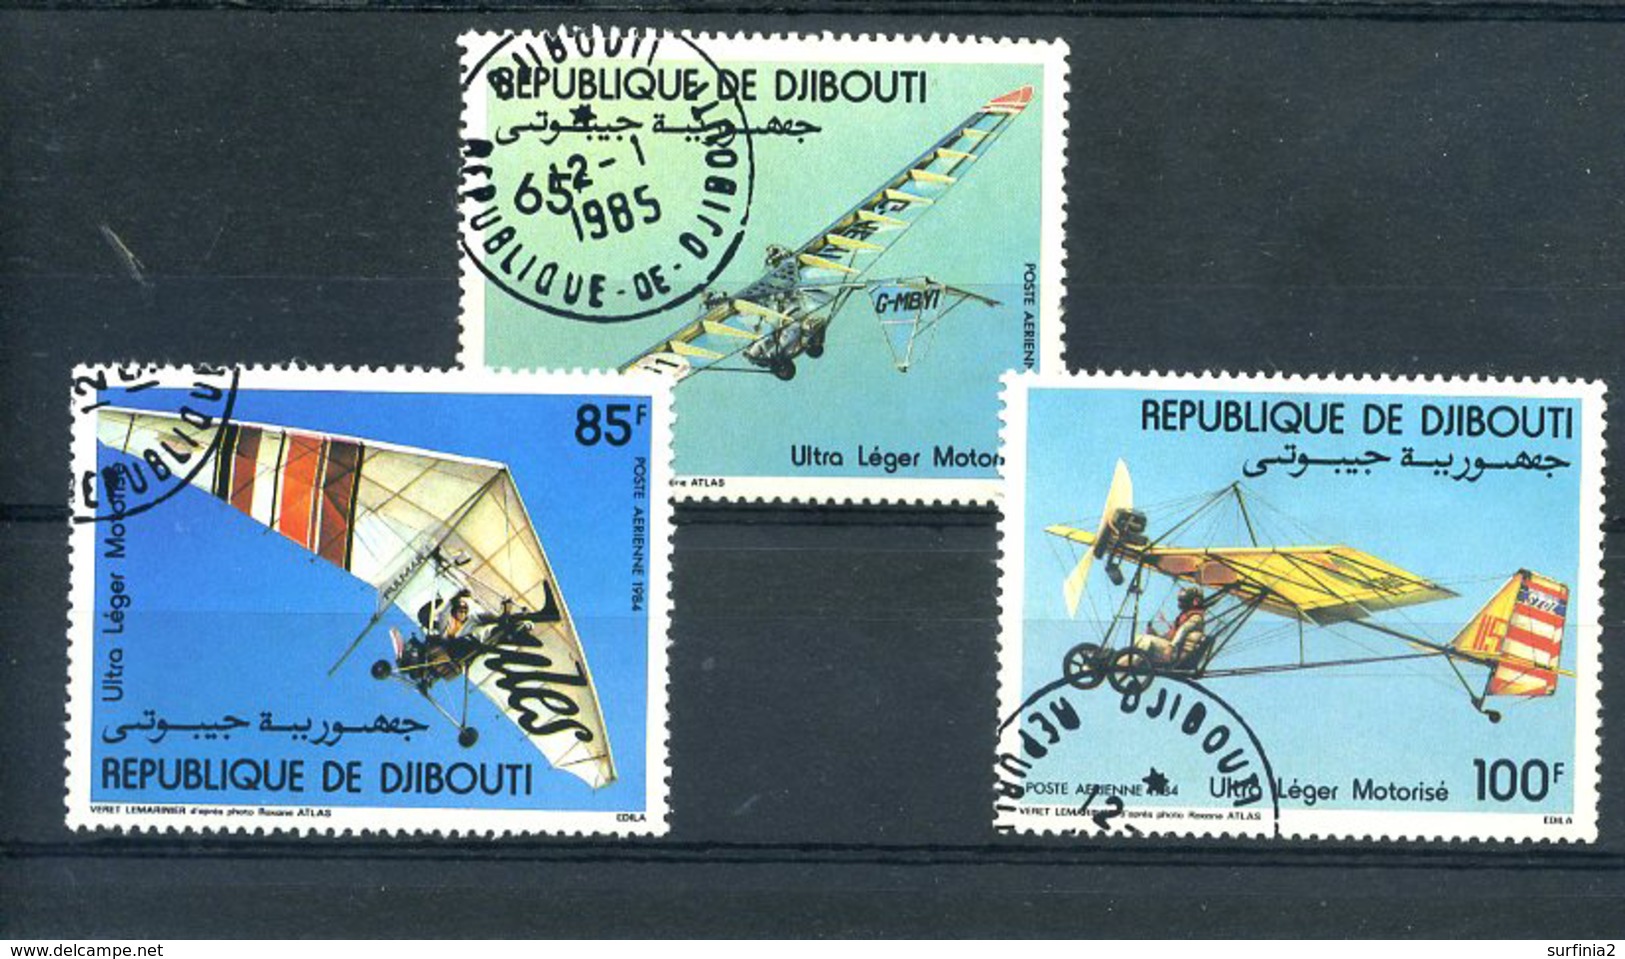 STAMPS - DJIBOUTI - 1984  SET OF POWERLESS FLIGHT FINE USED - Djibouti (1977-...)